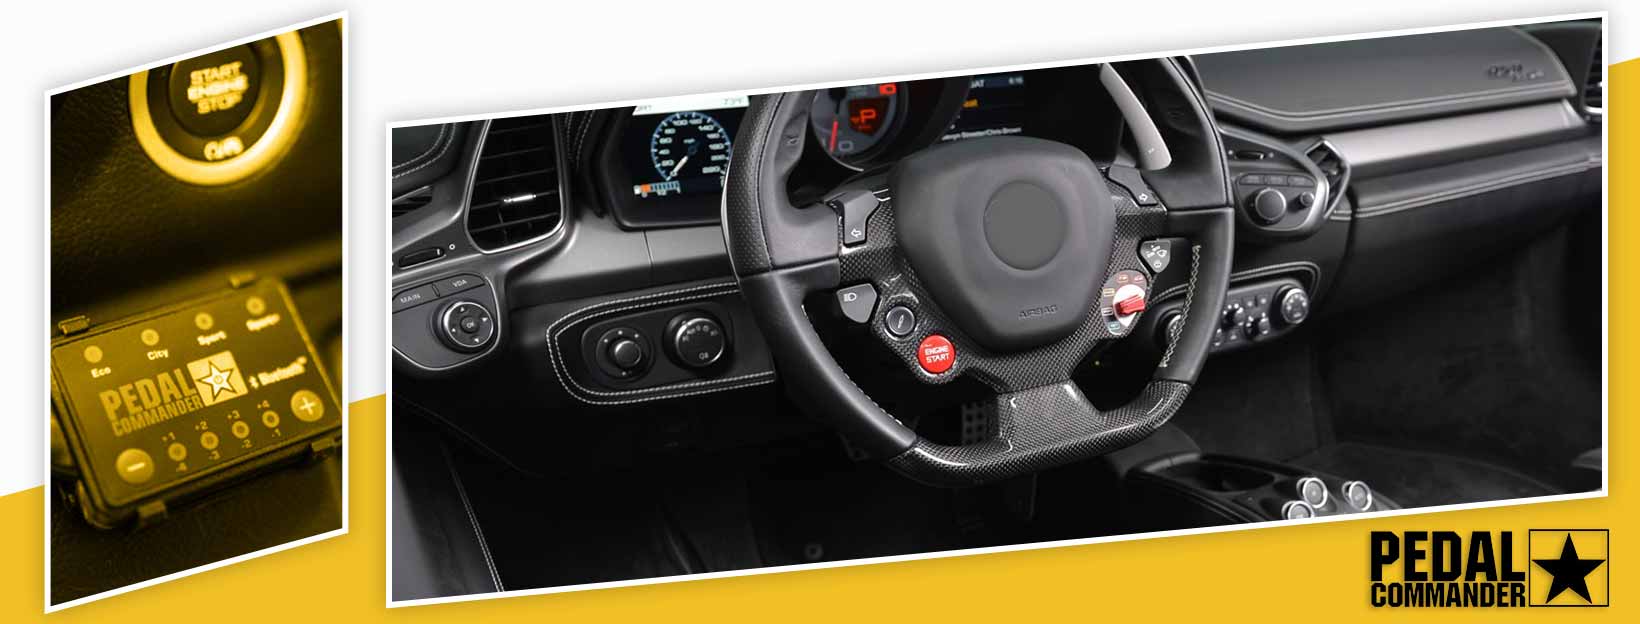 Pedal Commander for Ferrari 458 - interior